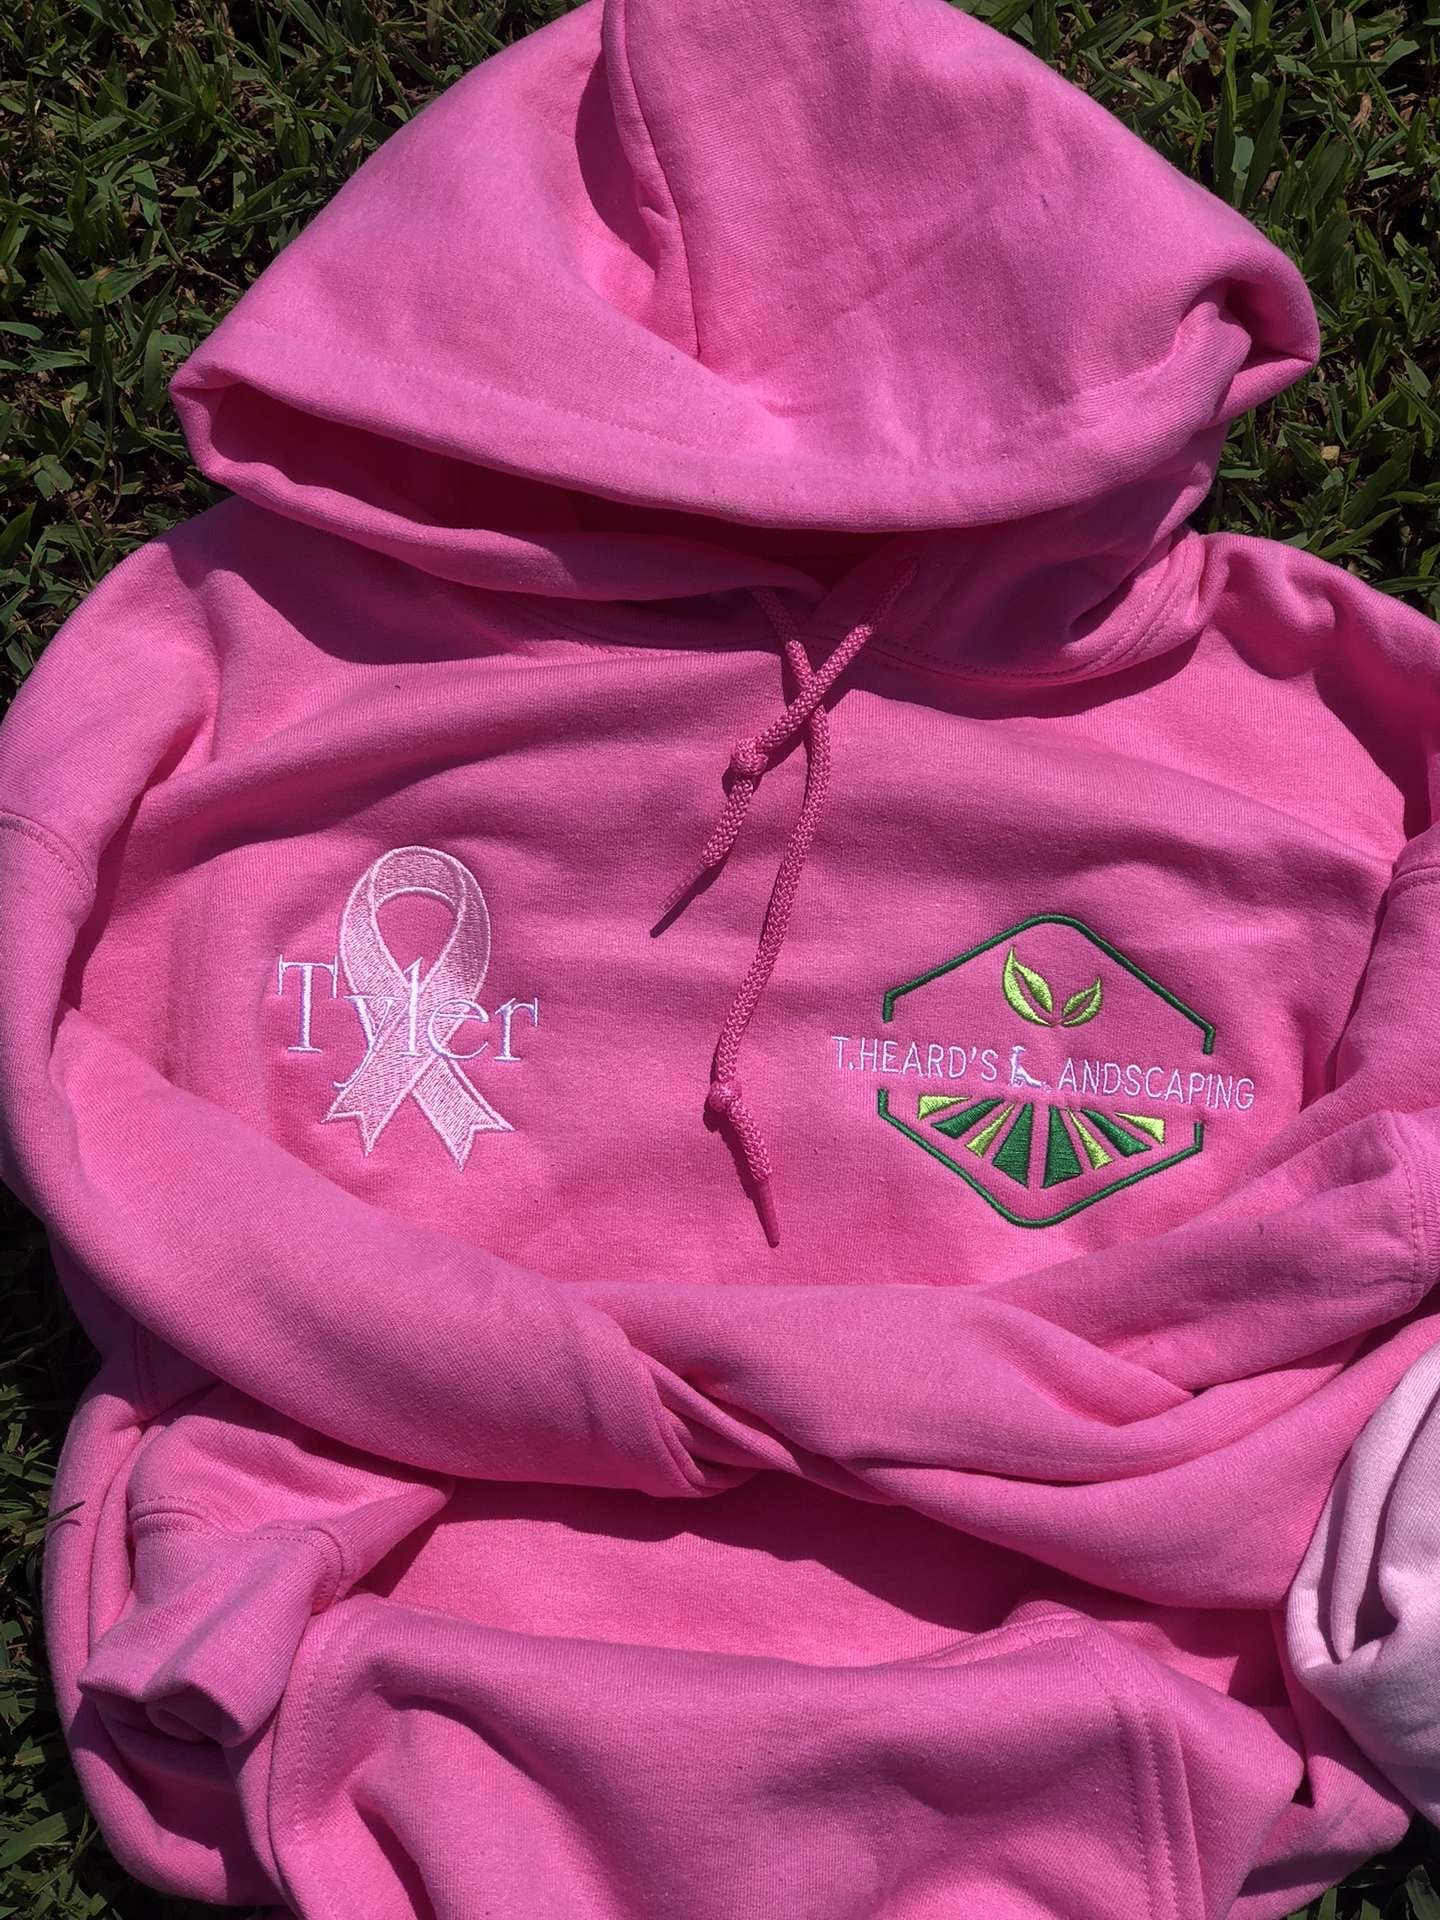 Breast Cancer Awareness Hoodies